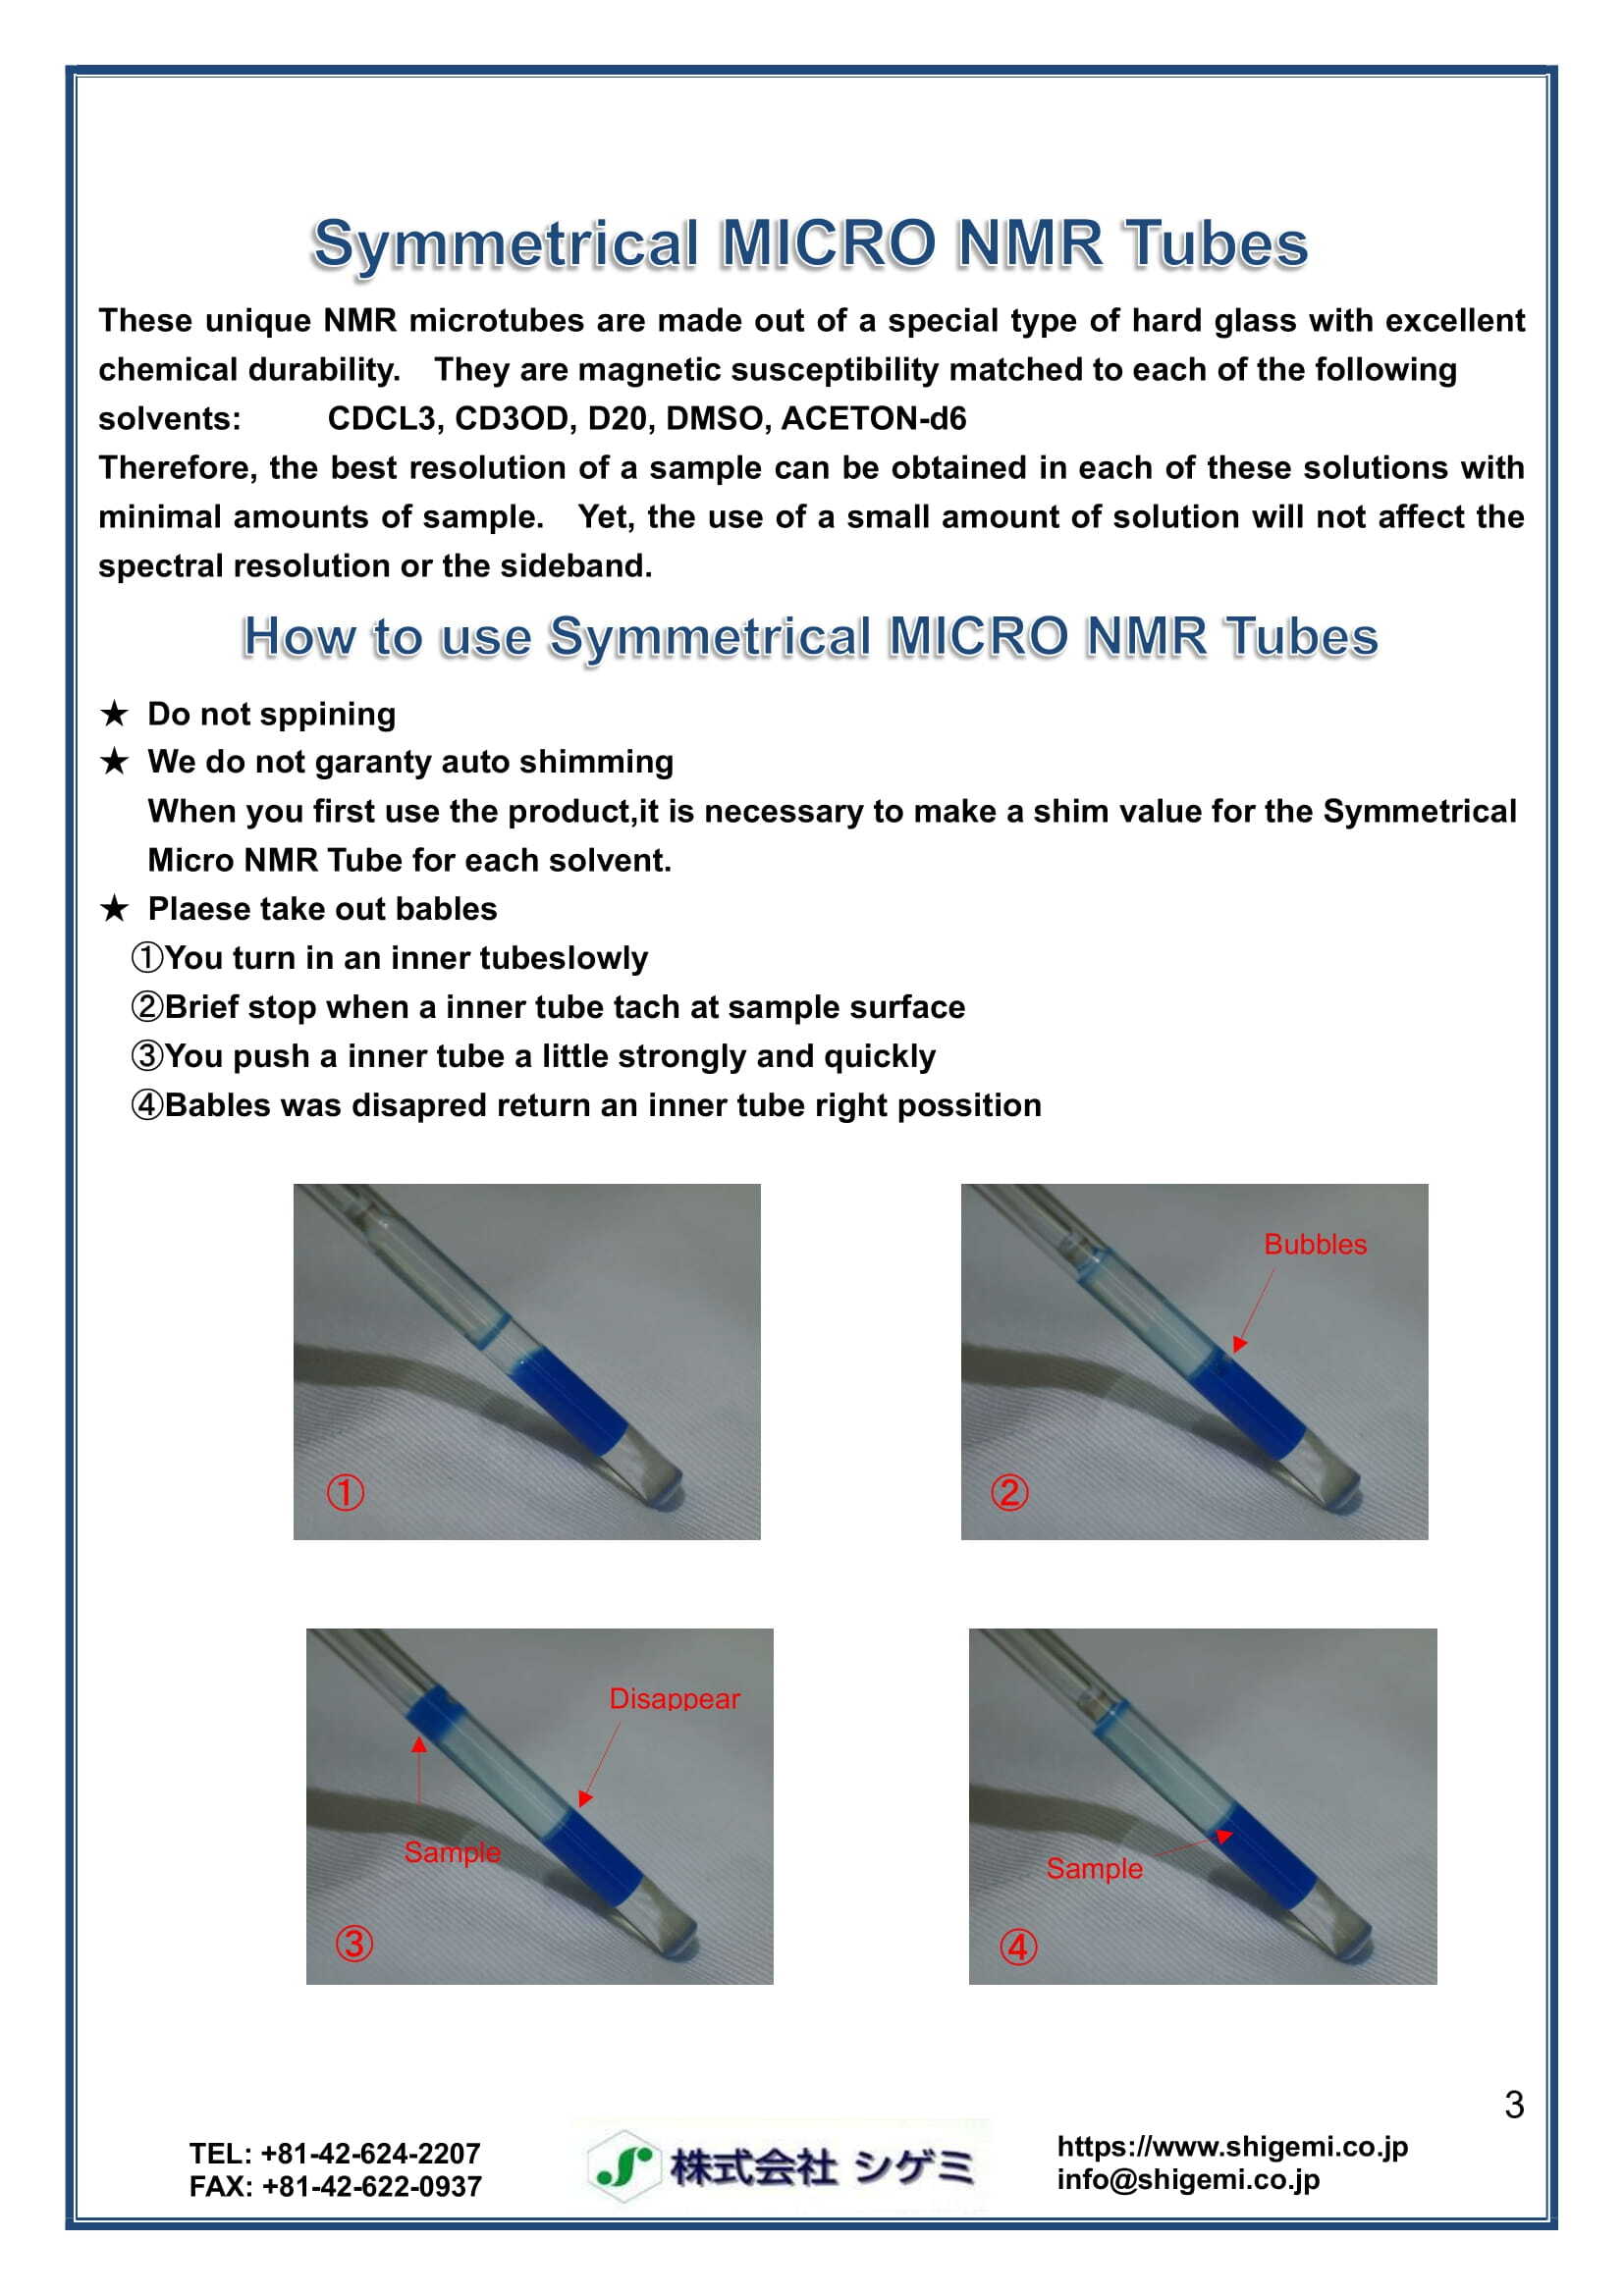 Symmetrical MICRO NMR Tubes